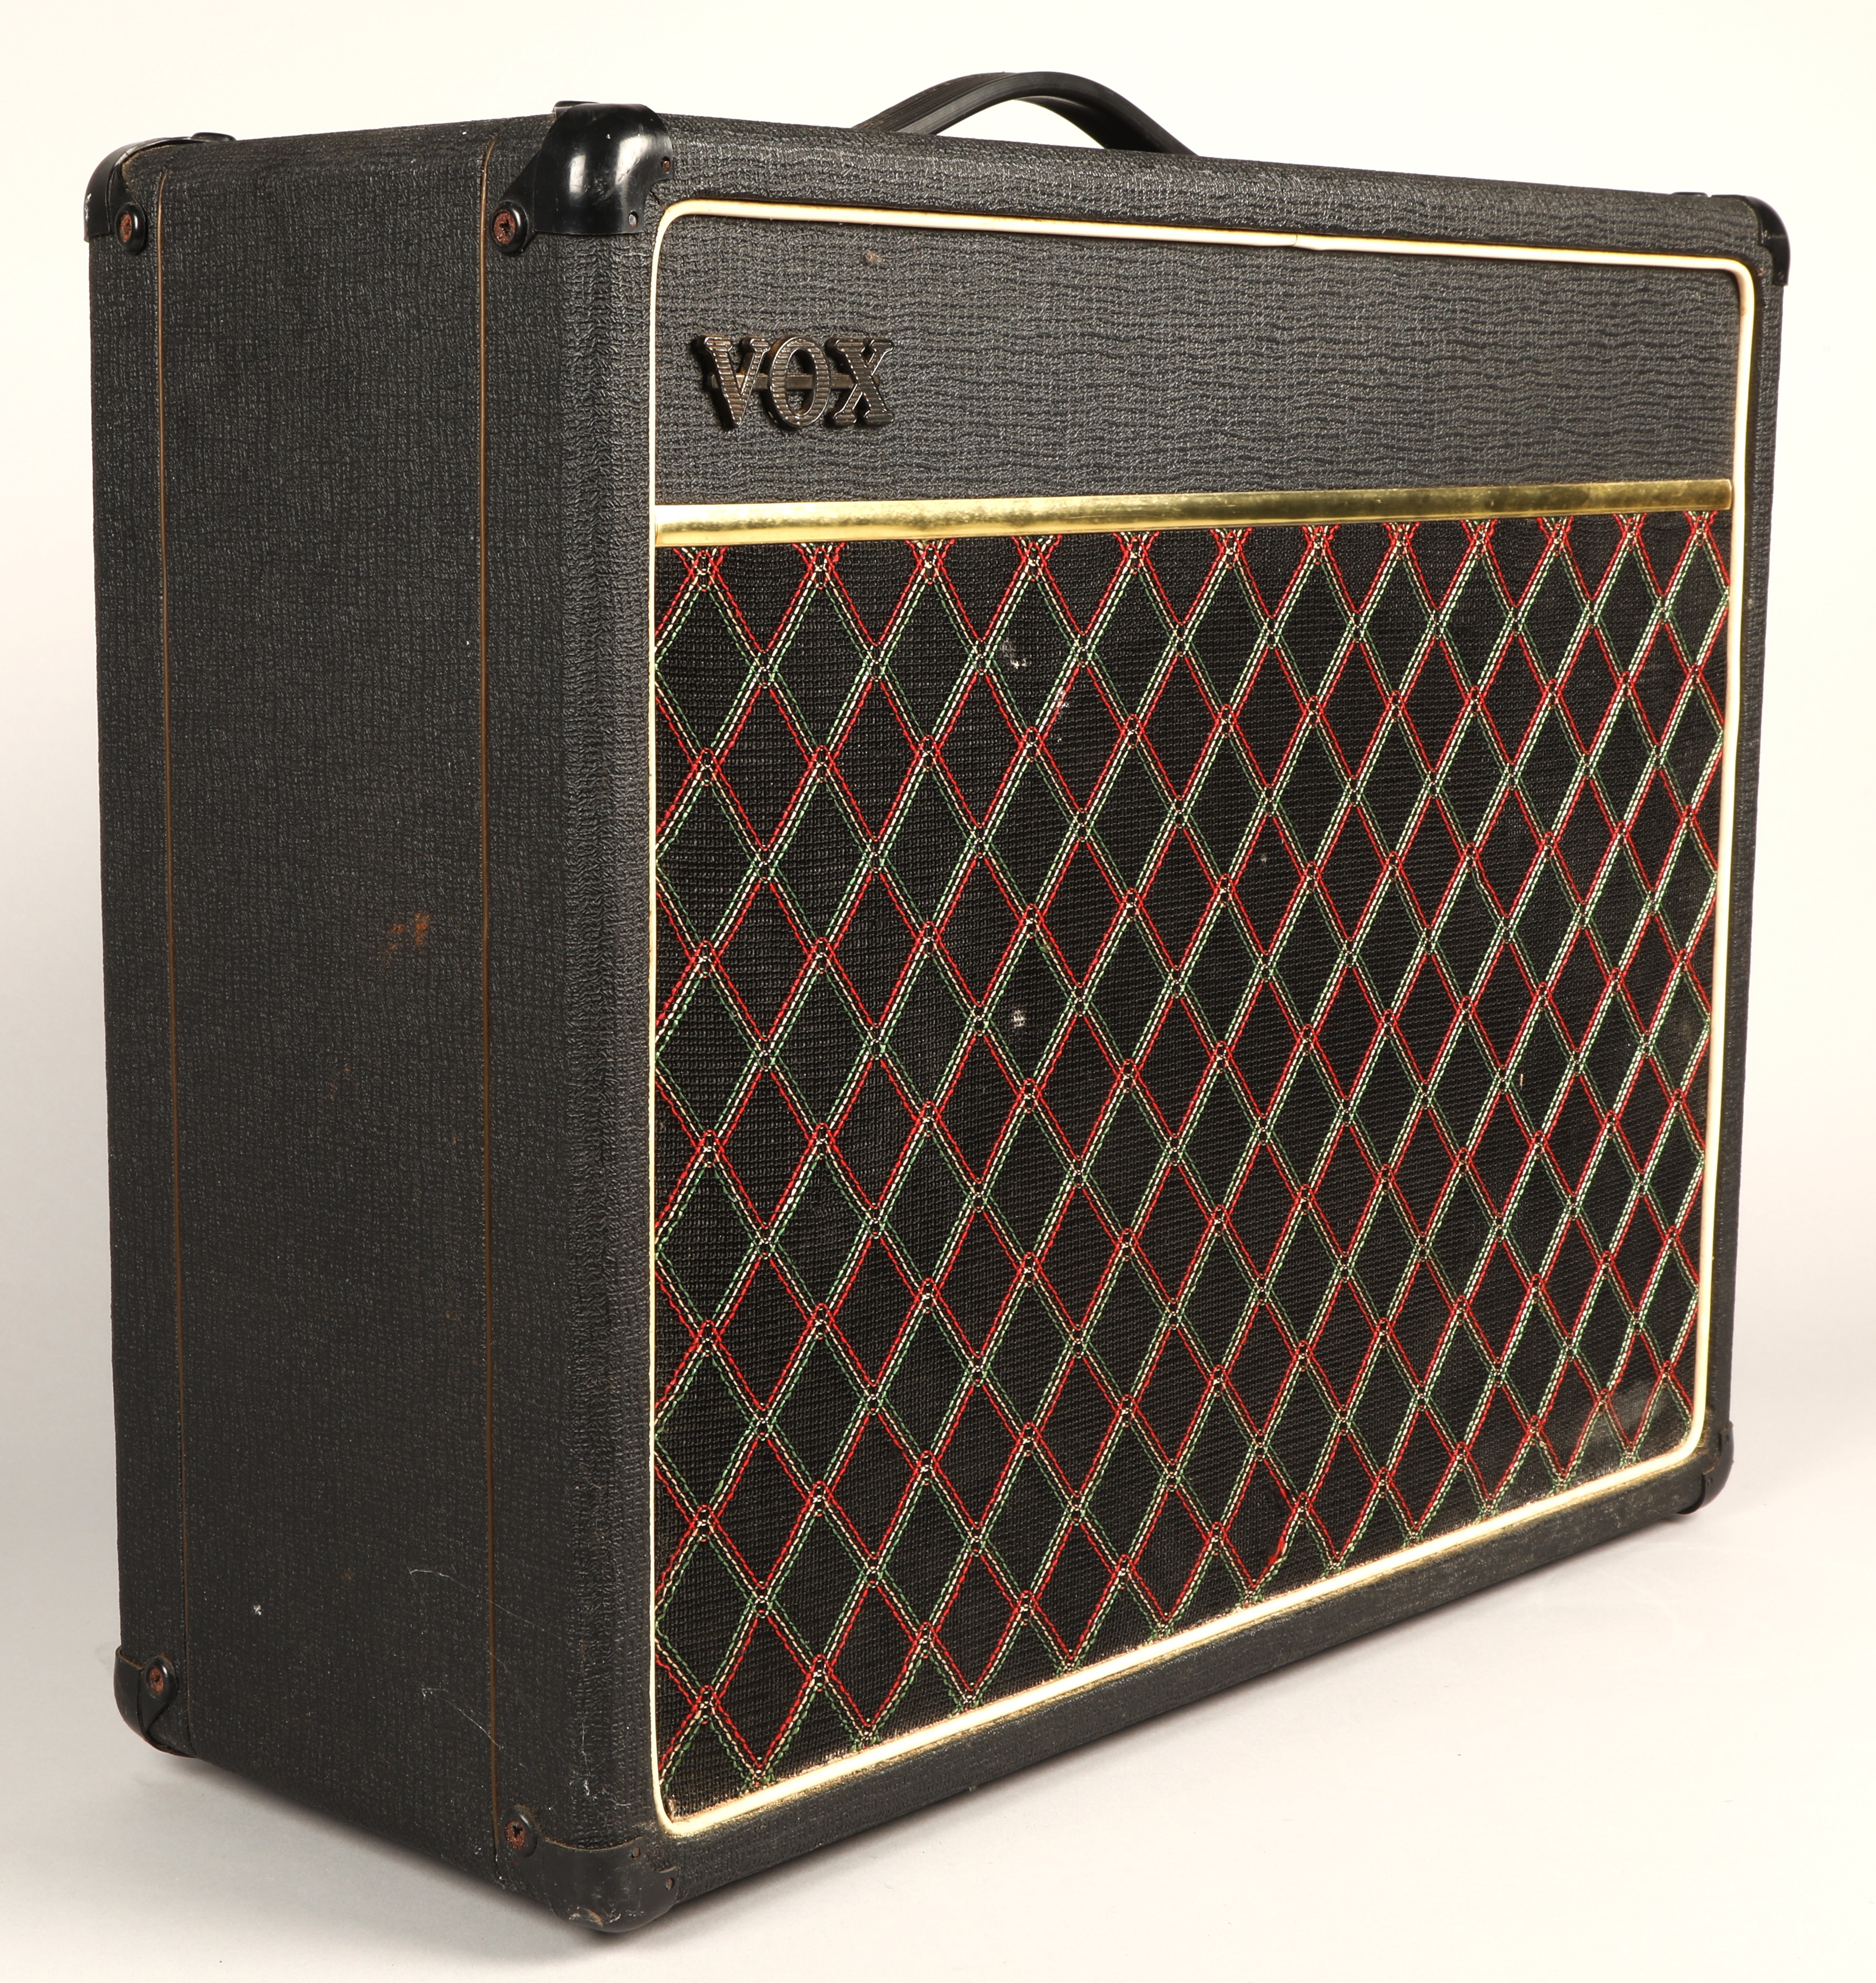 Vox Lead 50 amp, circa 1970, - Image 2 of 3